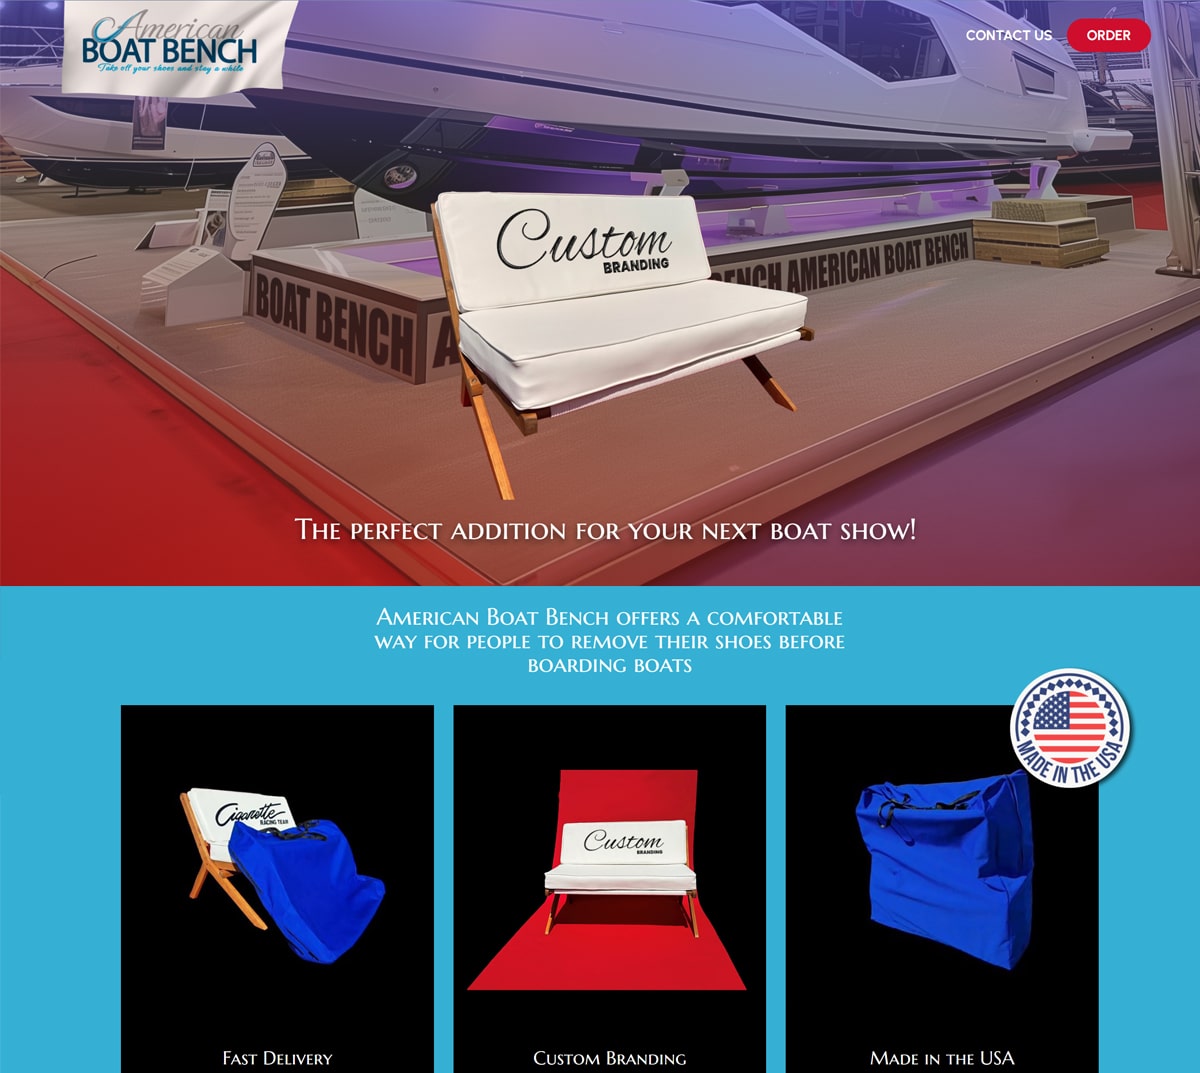 American Boat Bench portfolio image for desktop display.